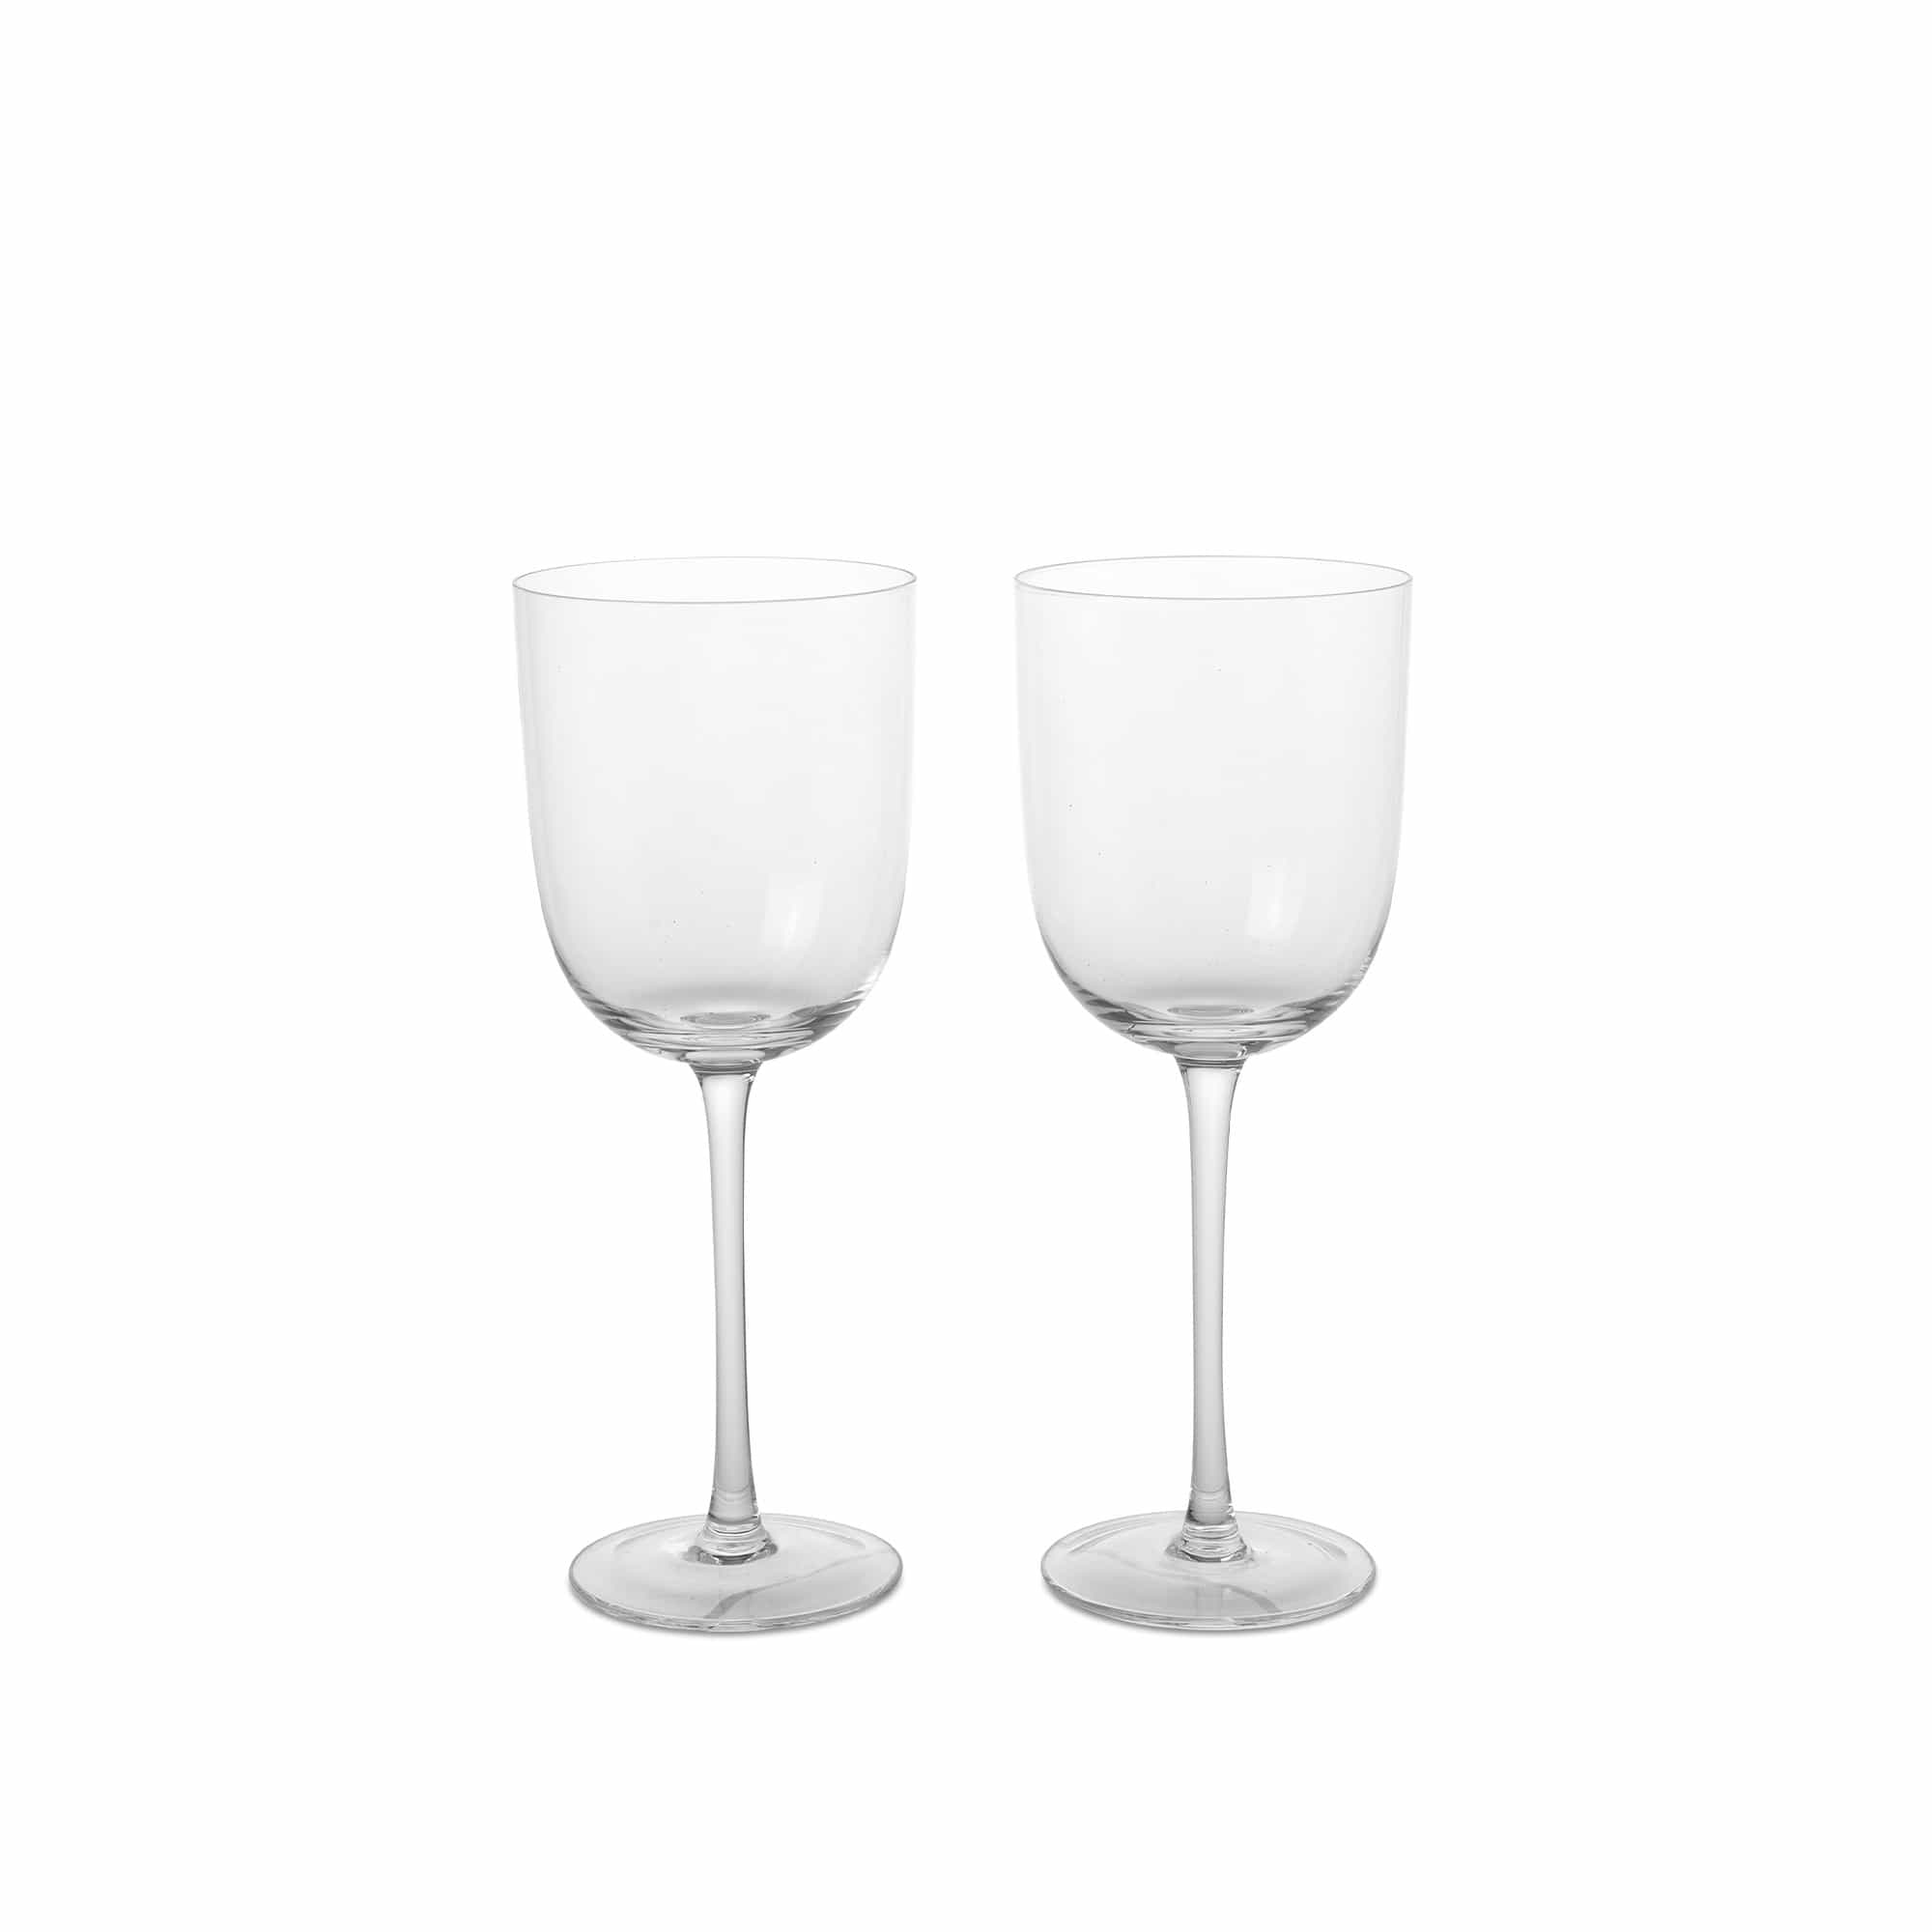 Host White Wine Glasses Set of 2